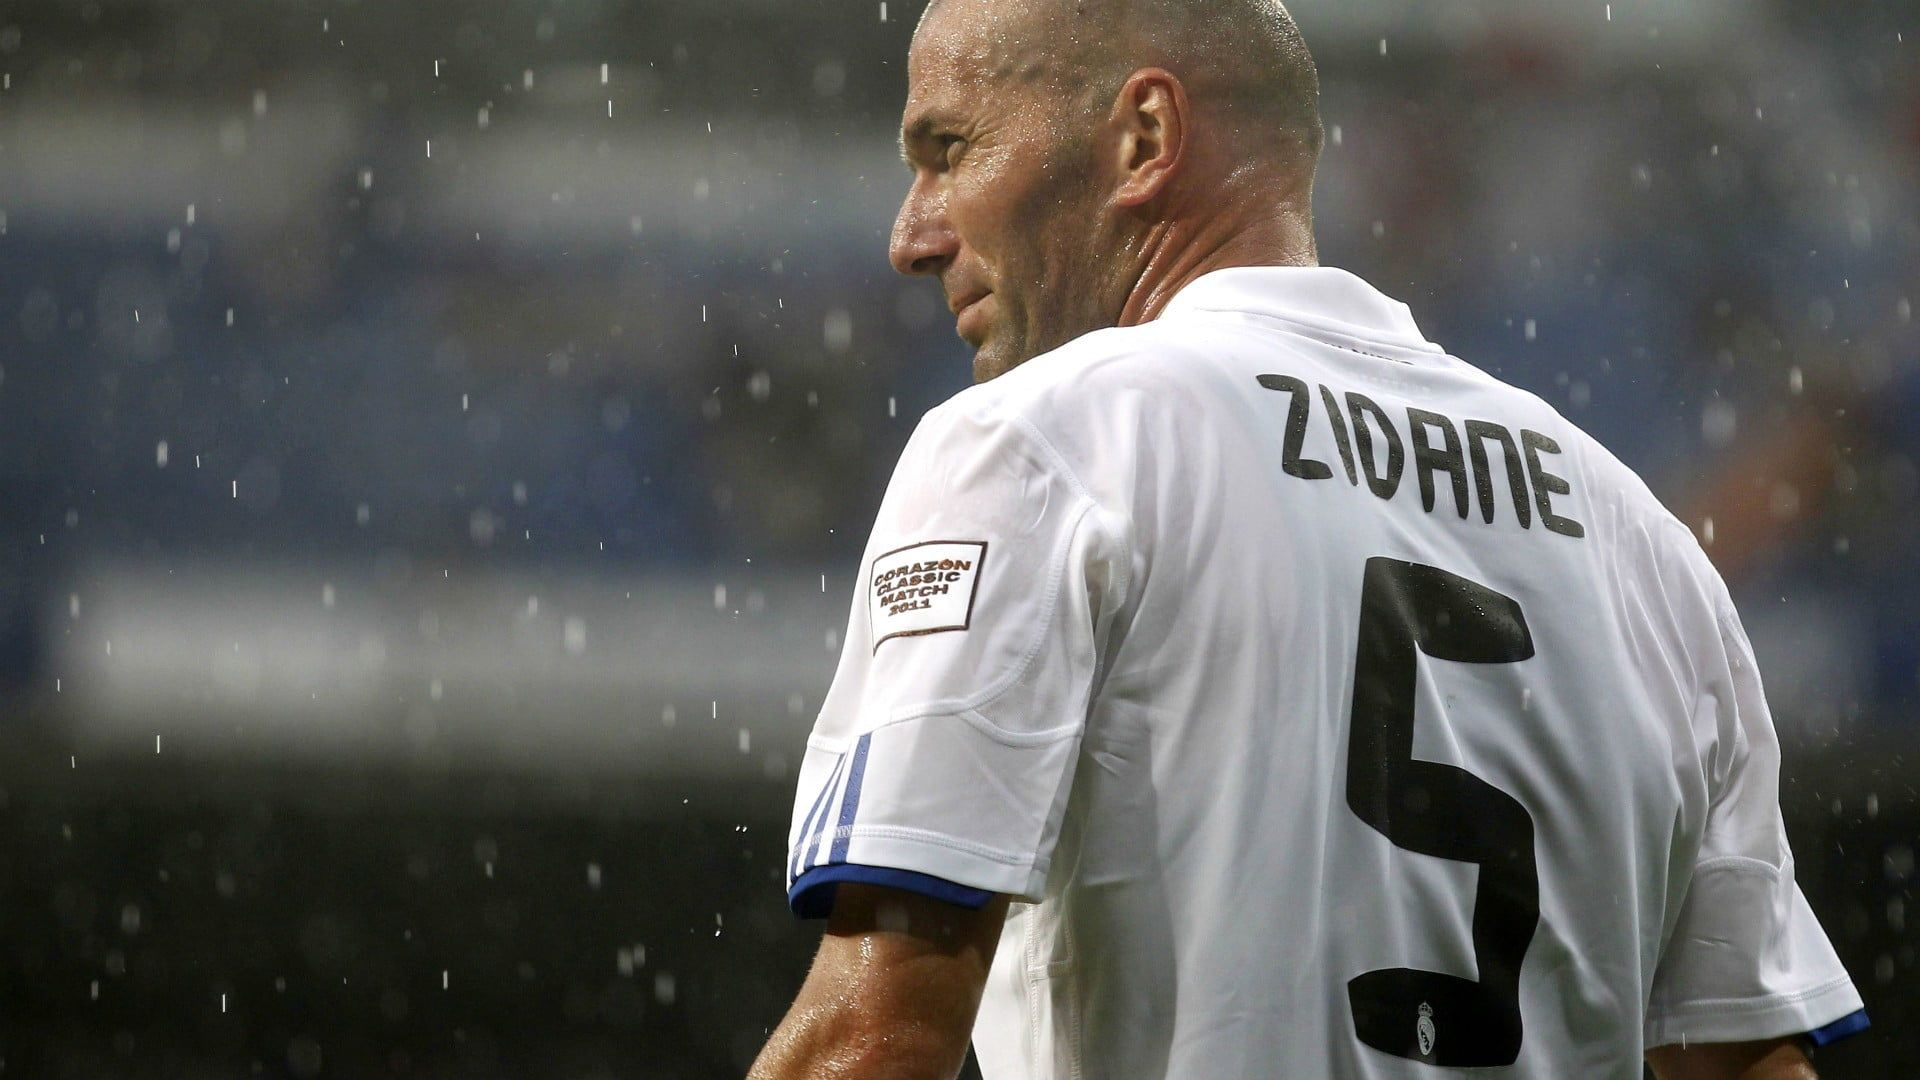 1920x1080 Footballers wallpaper, soccer, Zinedine Zidane, men's white and black Adidas jersey | Zinedine zidane real madrid, Zinedine zidane, Real madrid